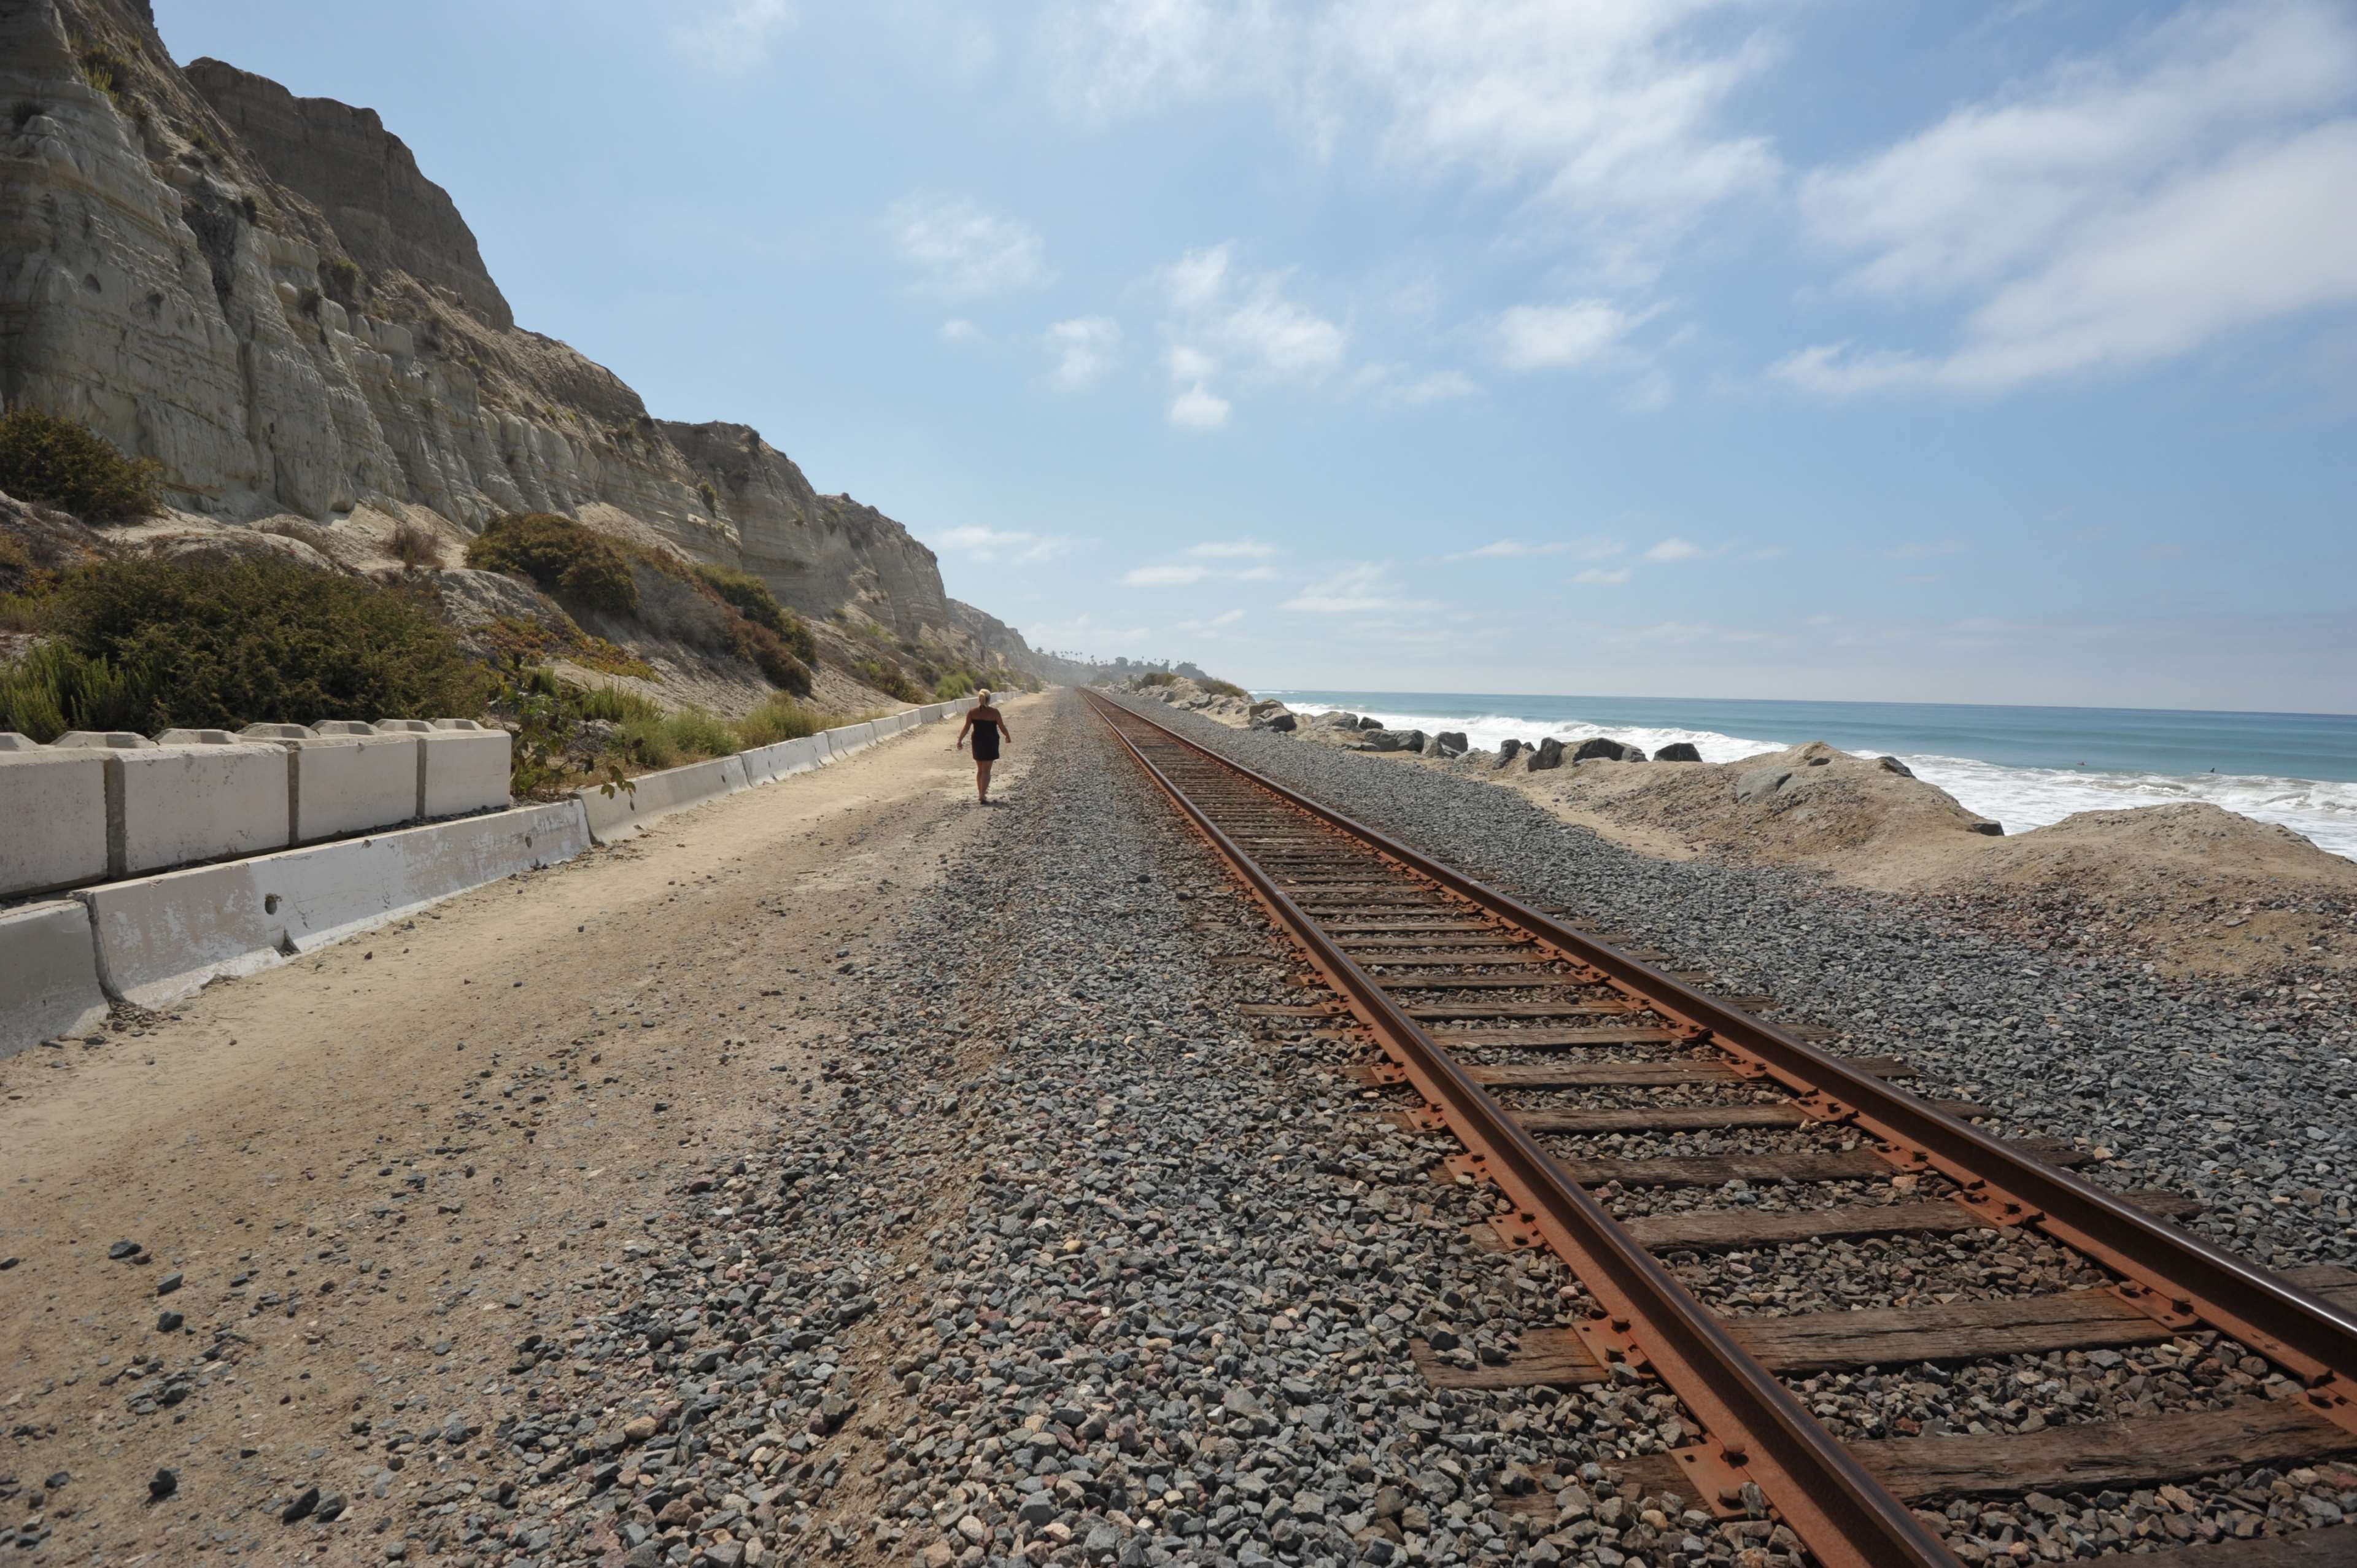 beach, san clemente, train tracks, sky, the way forward, transportation